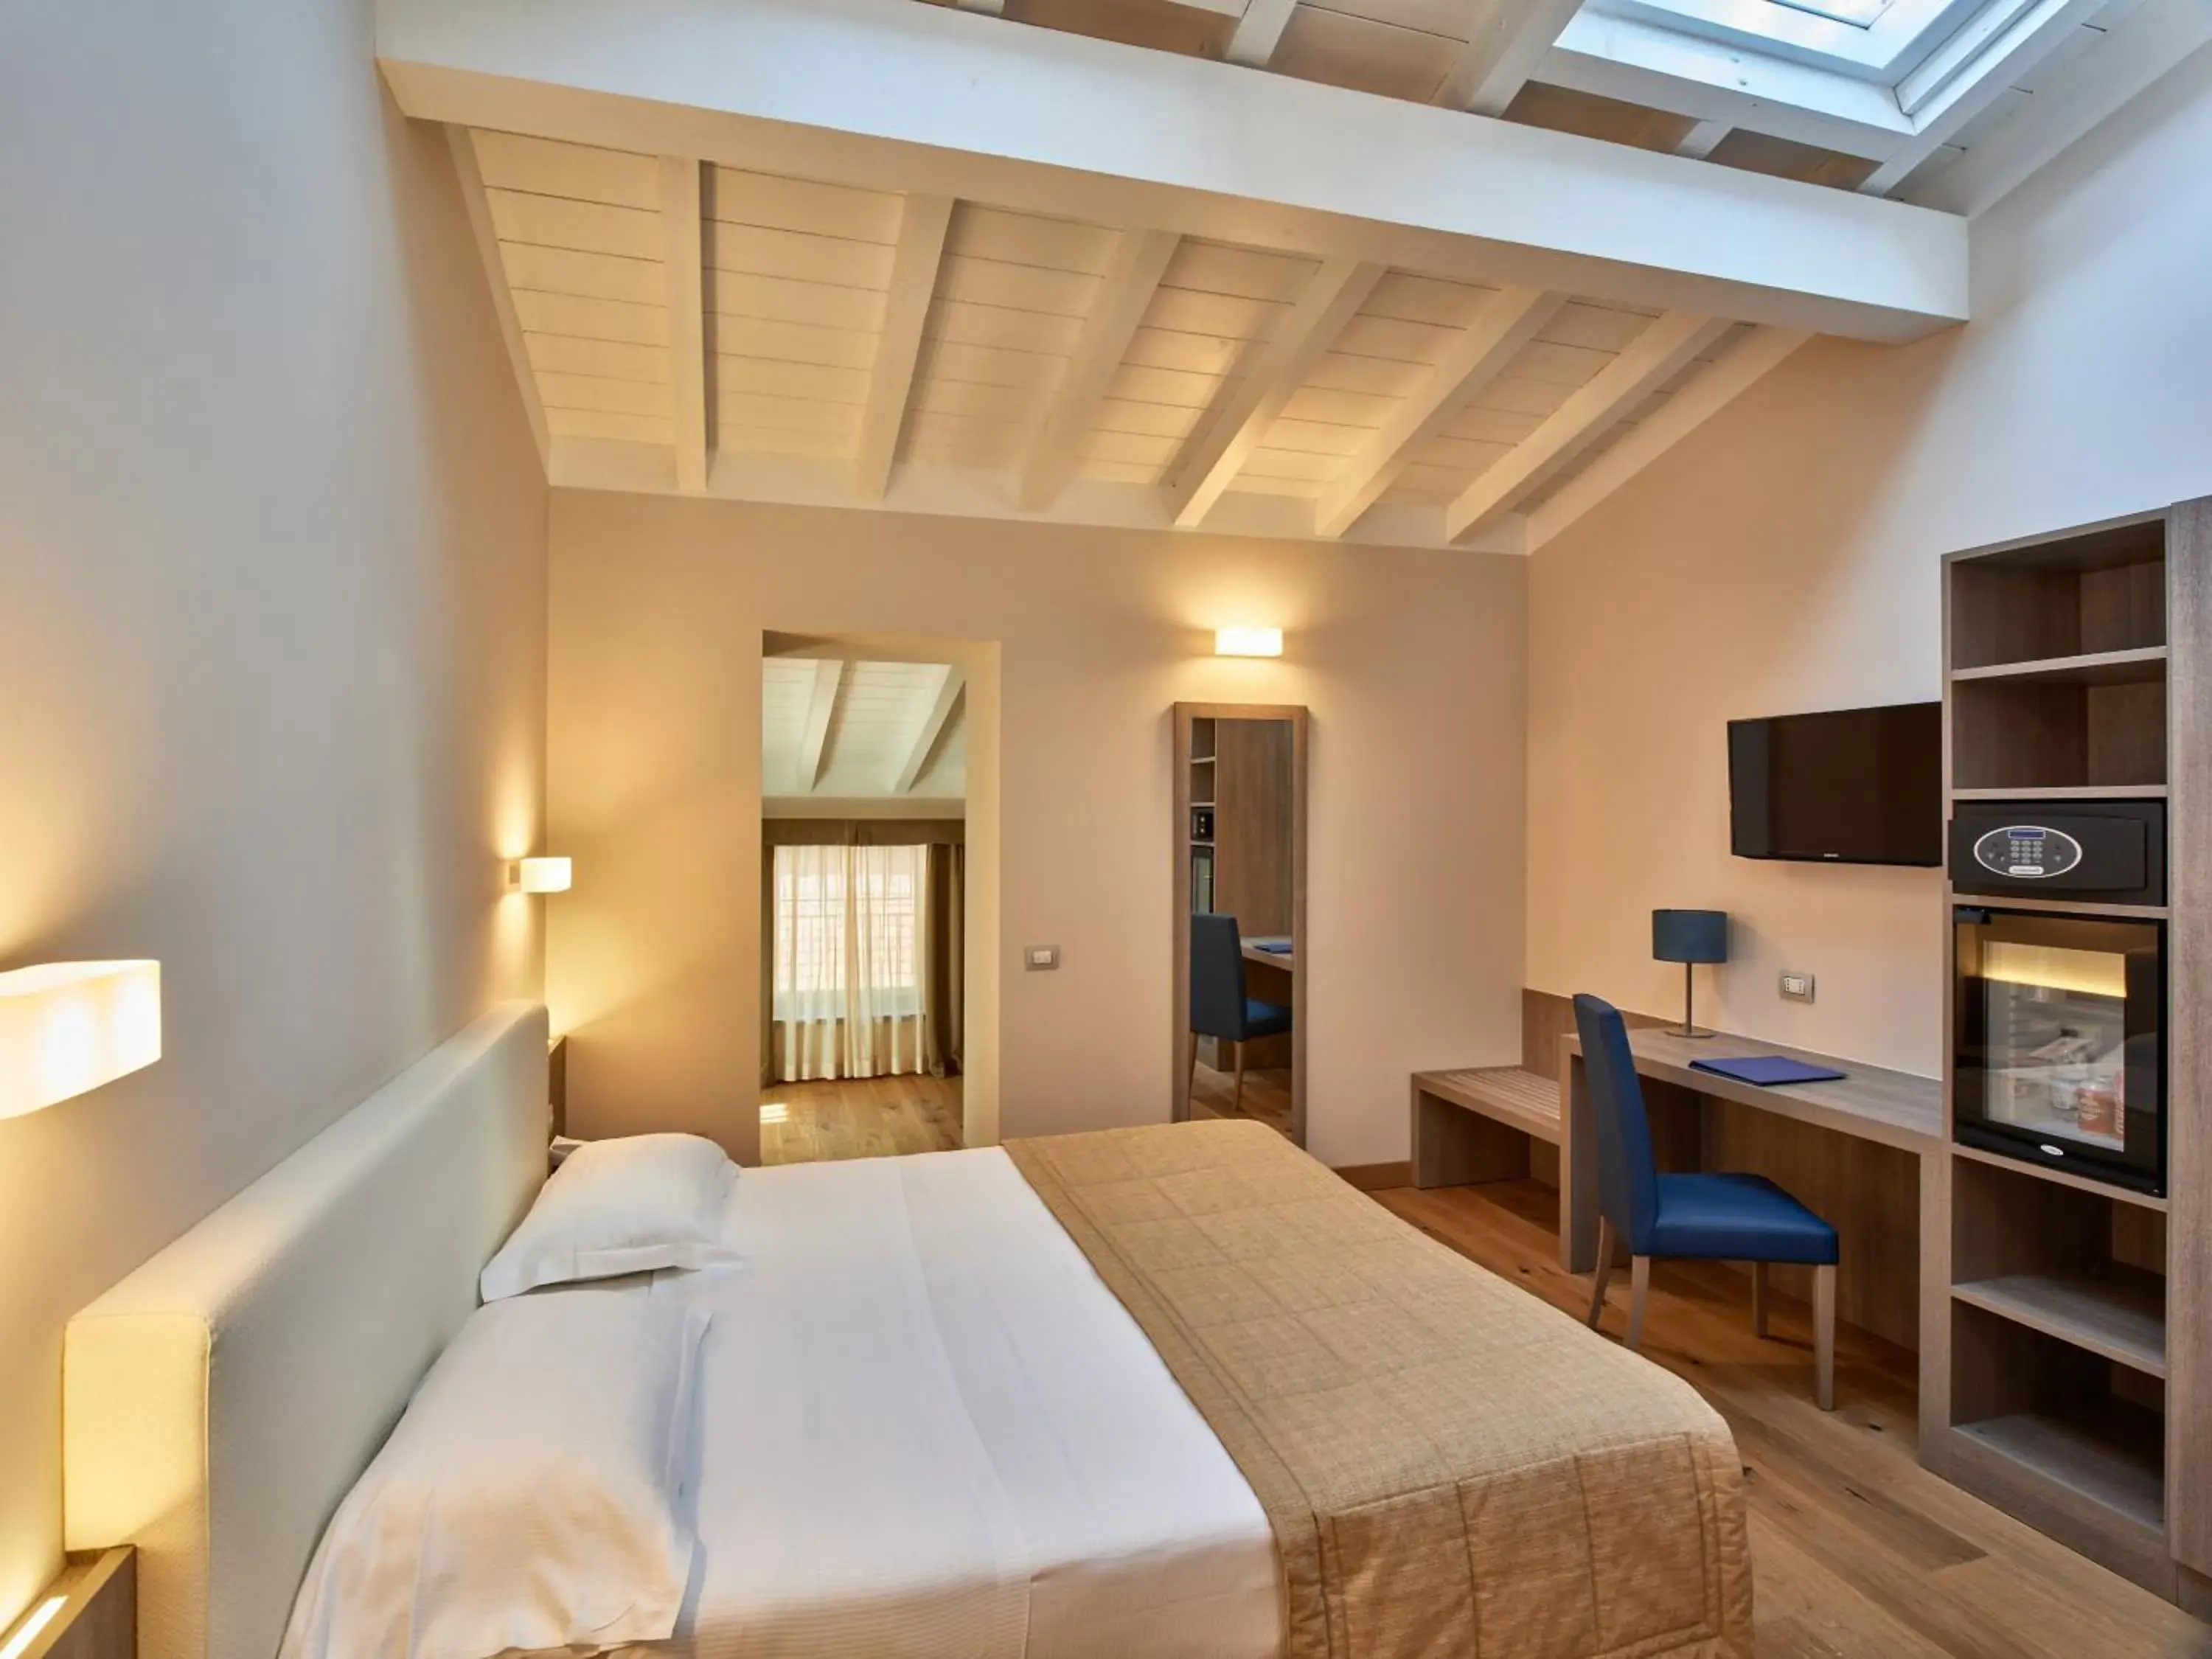 Deluxe Quadruple Room - single occupancy in Hotel Centrale